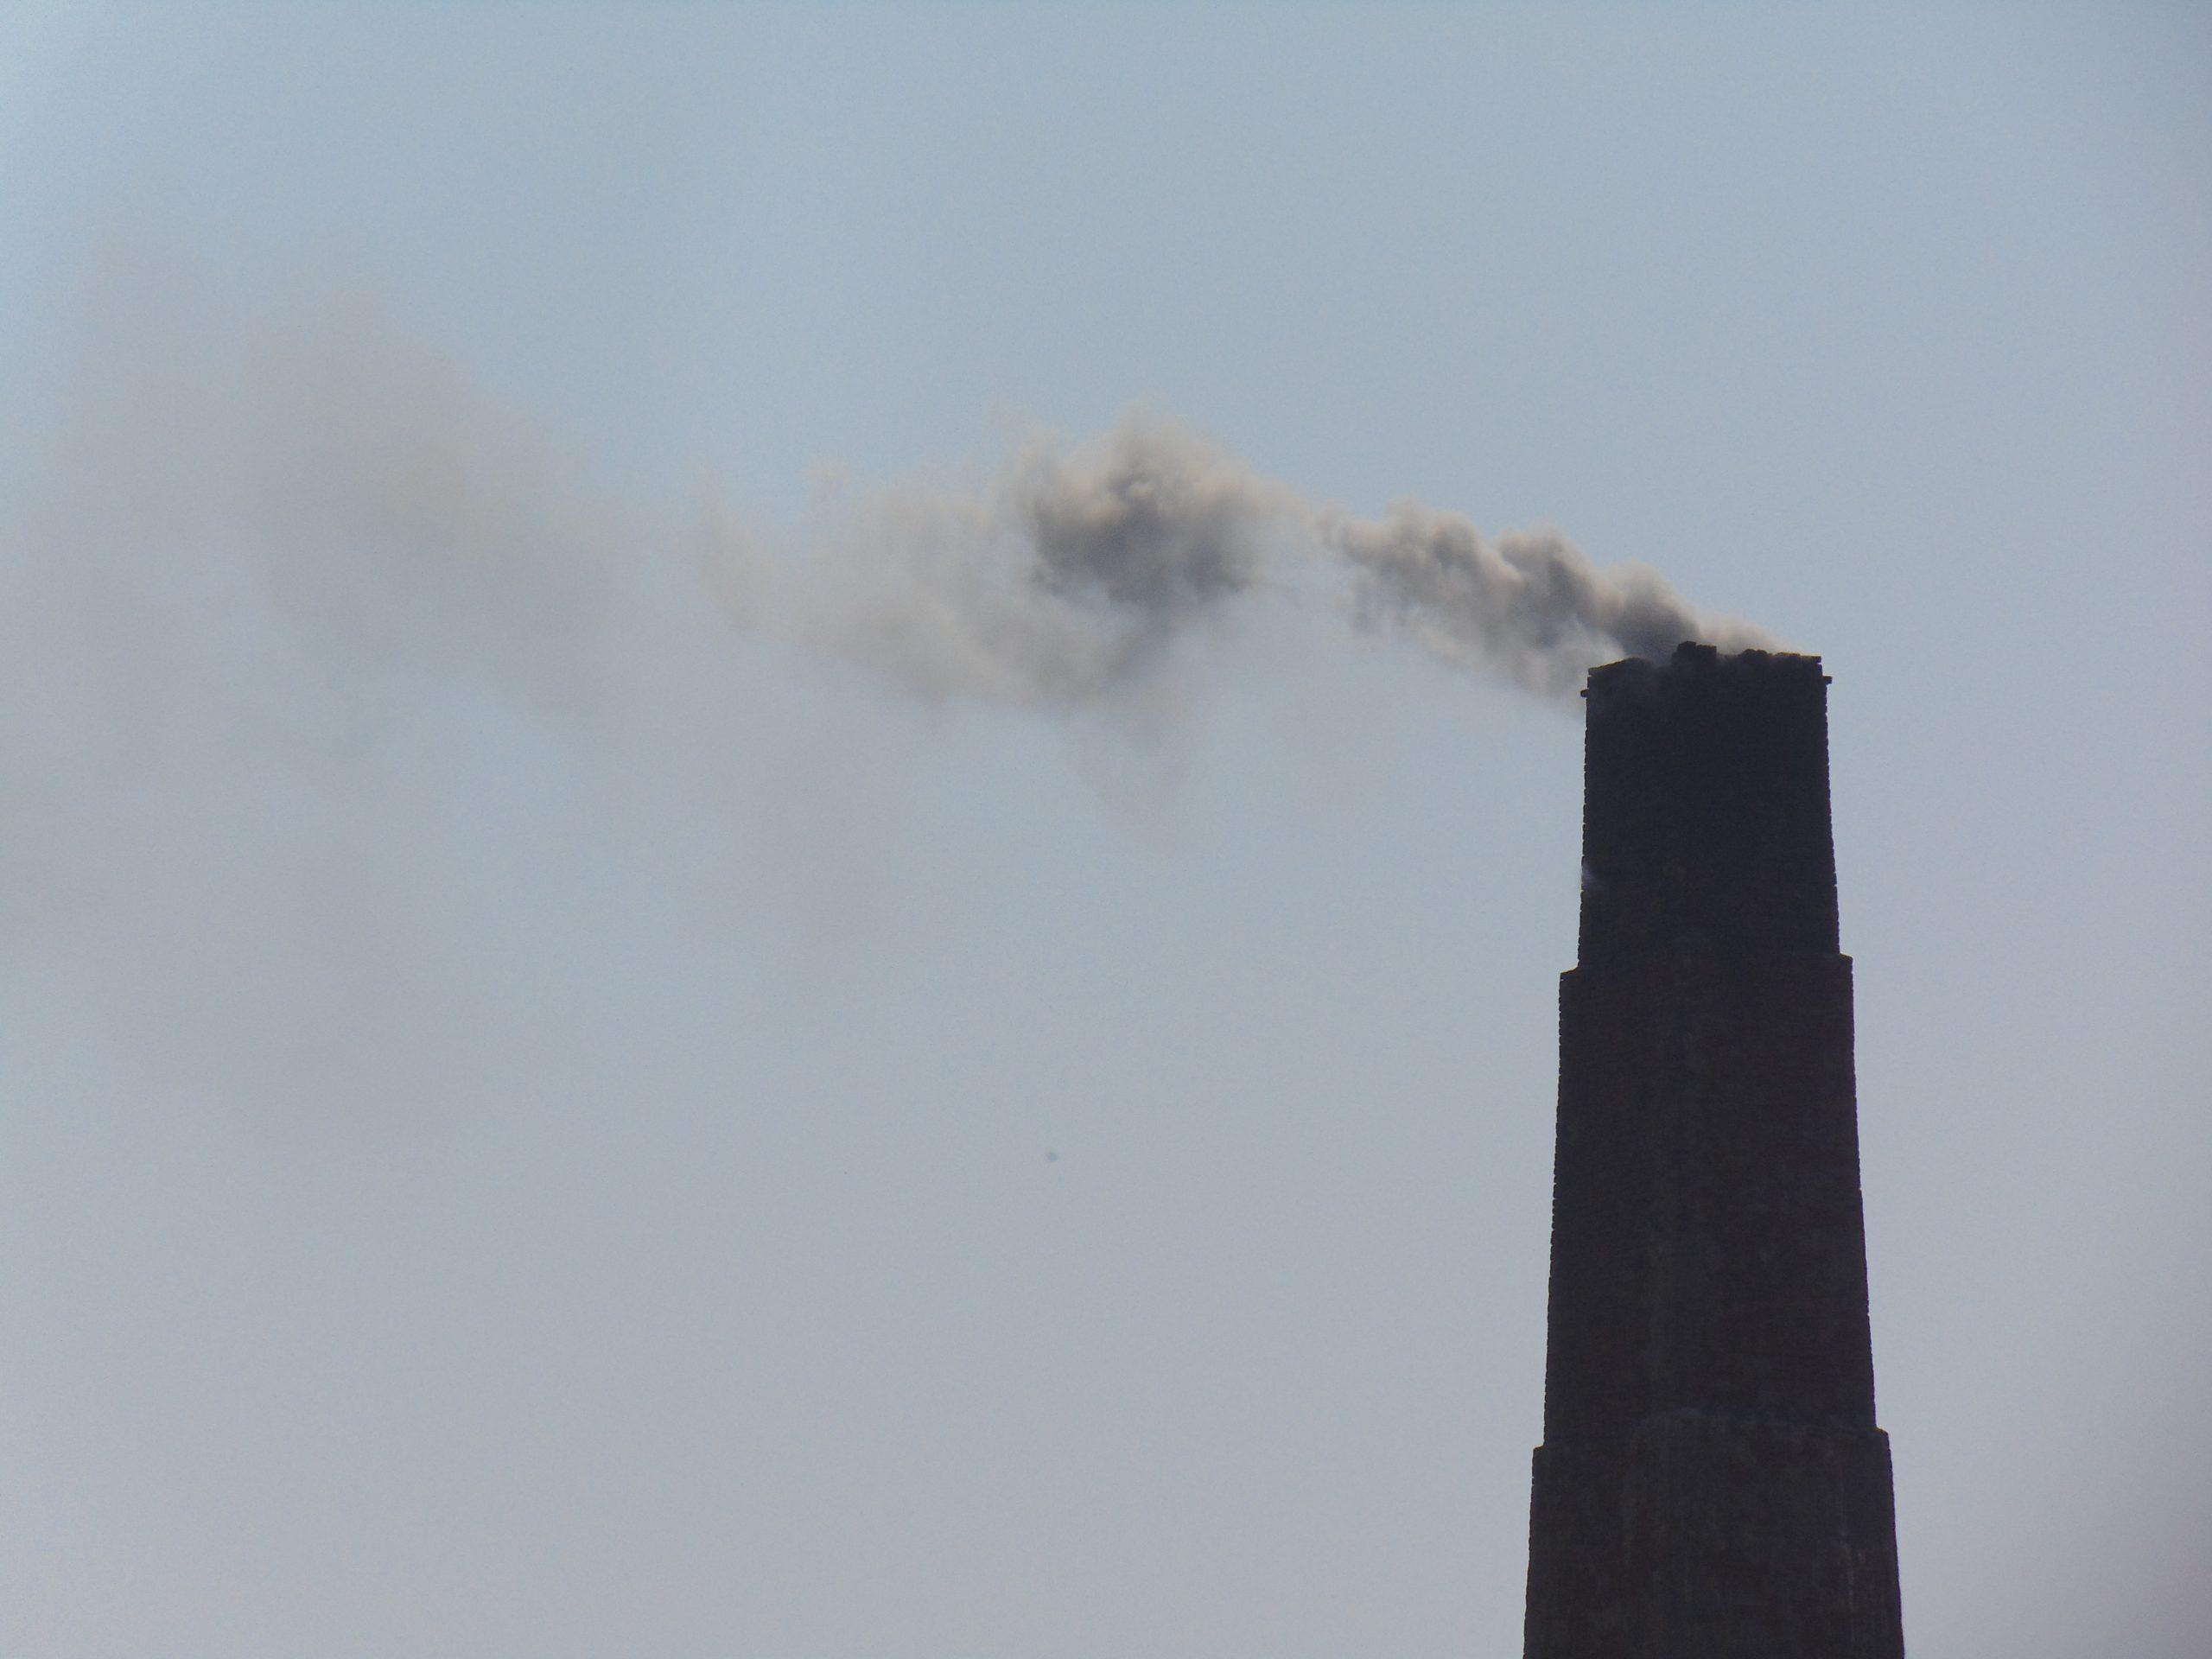 A factory chimney emitting smoke